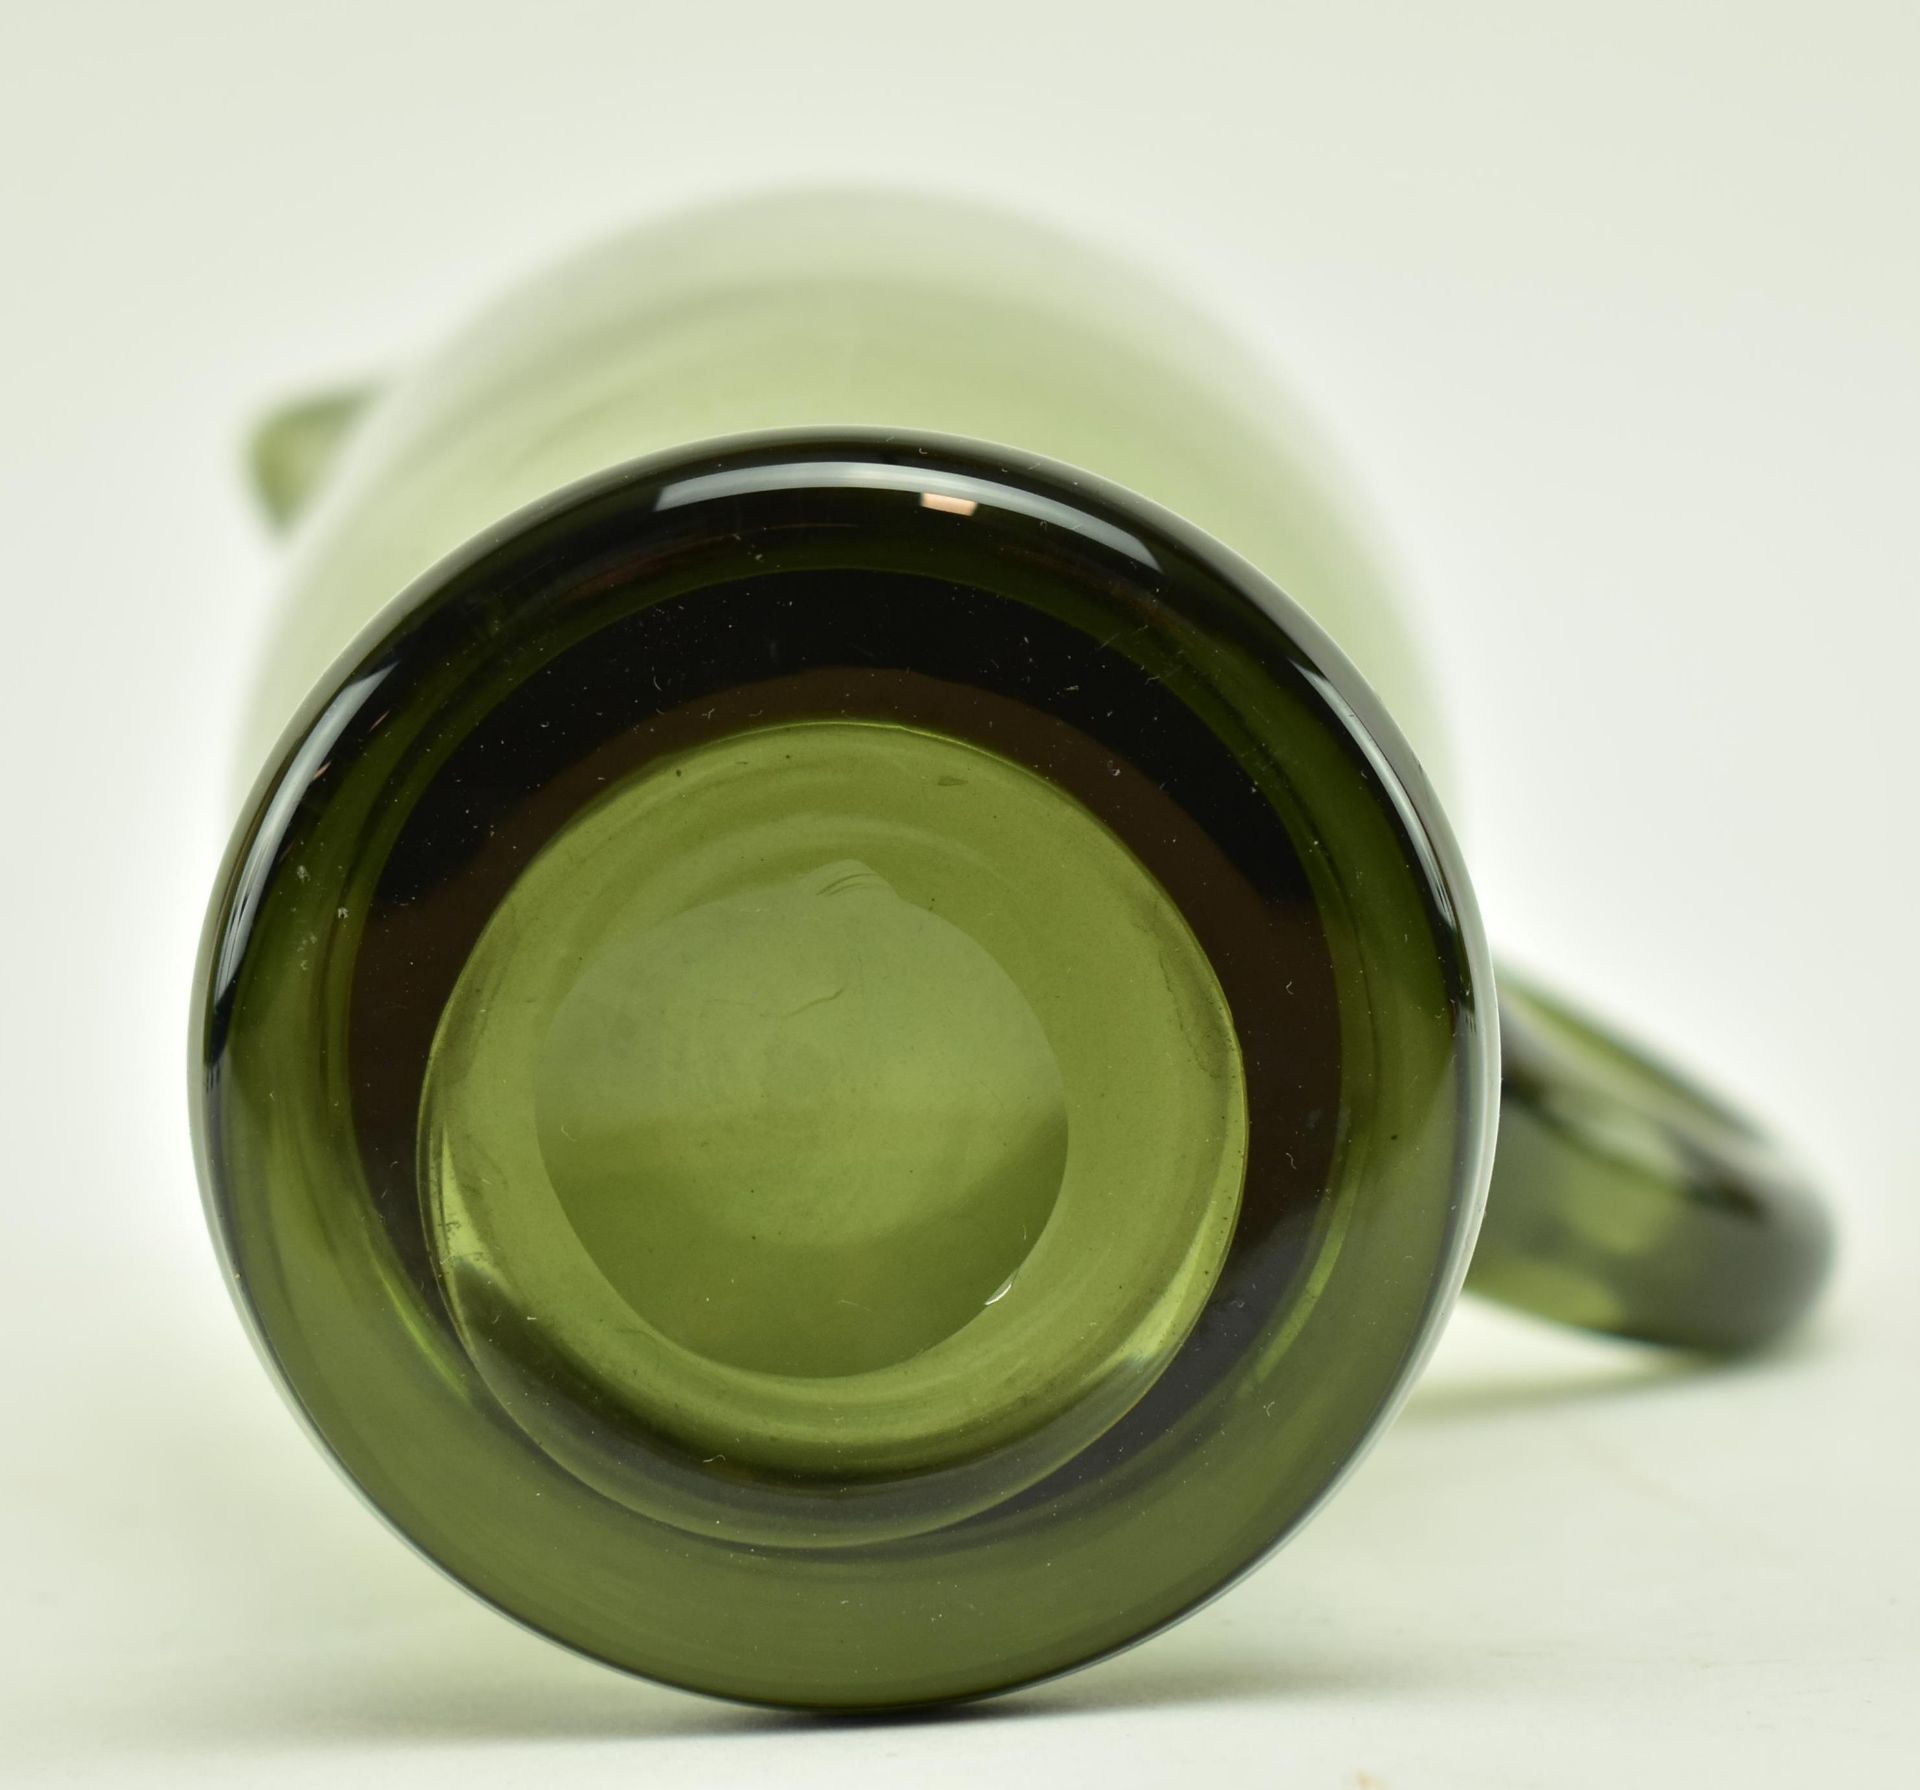 SIX SMOKED GREY GLASS WINE GLASSES & MATCHED PITCHER JUG - Image 5 of 8